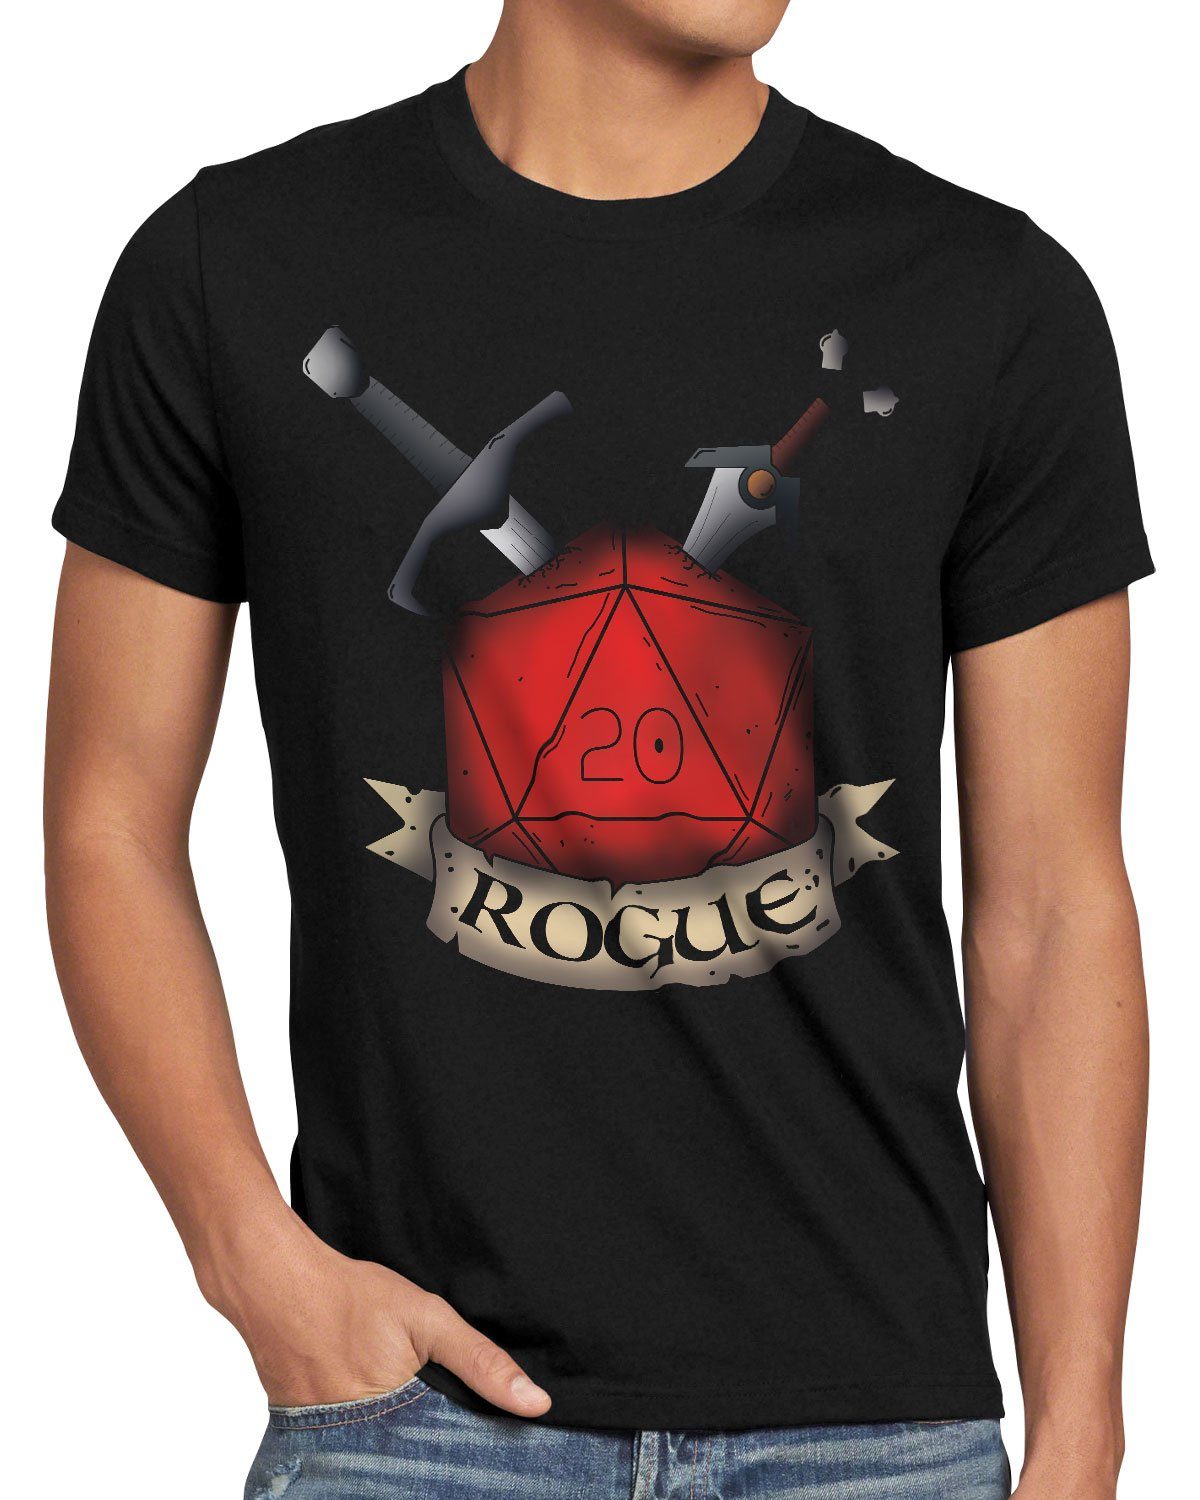 Print-Shirt dungeon style3 T-Shirt d20 tabletop Rogue dragons Herren Würfel